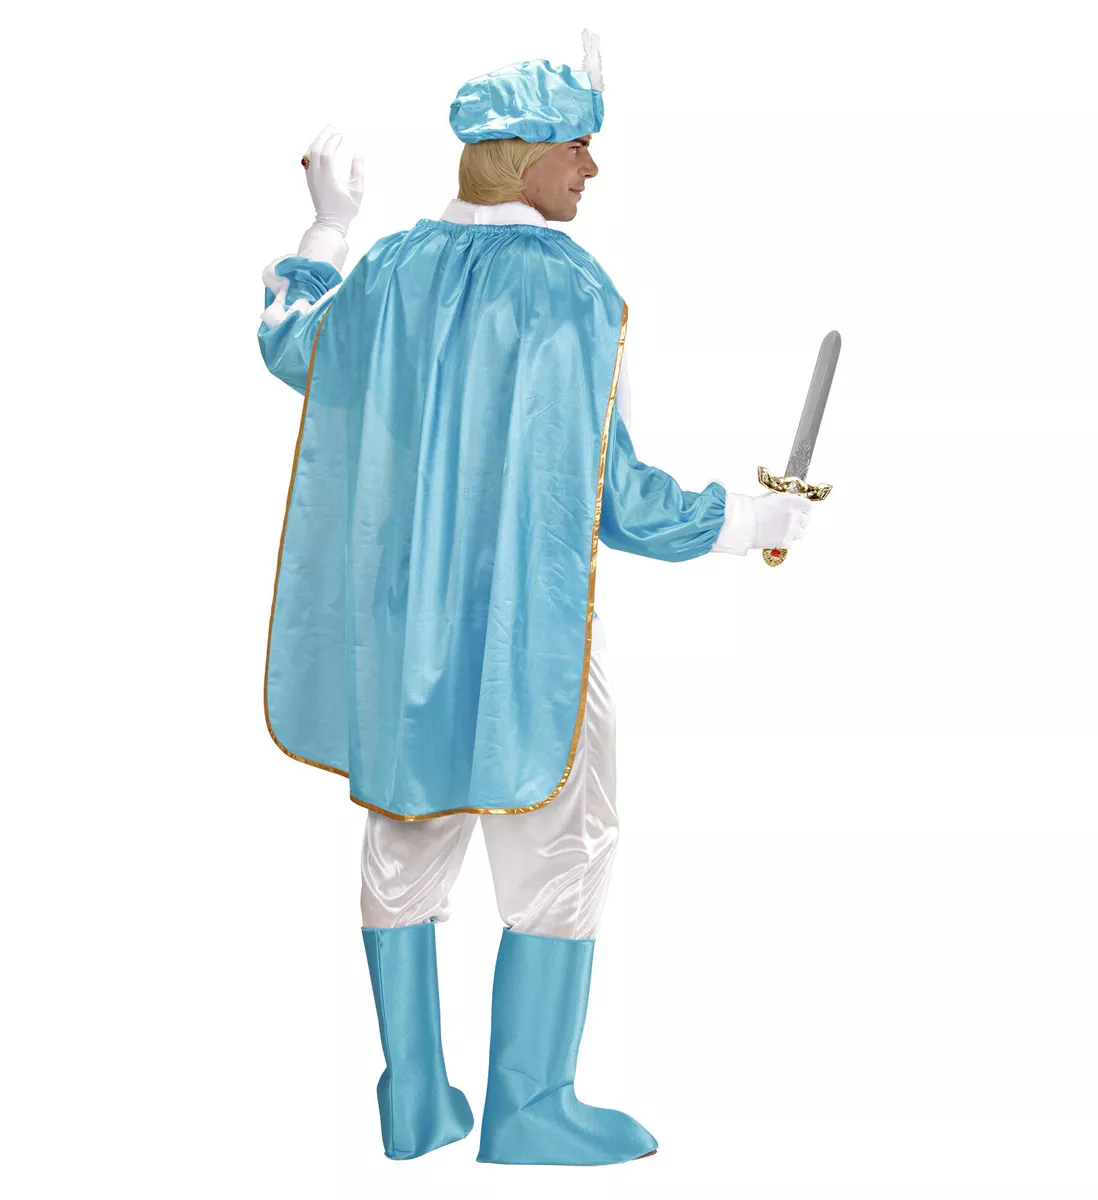 Costume Carnevale Adulto Travestimento Principe PS 19650 Prince | eBay